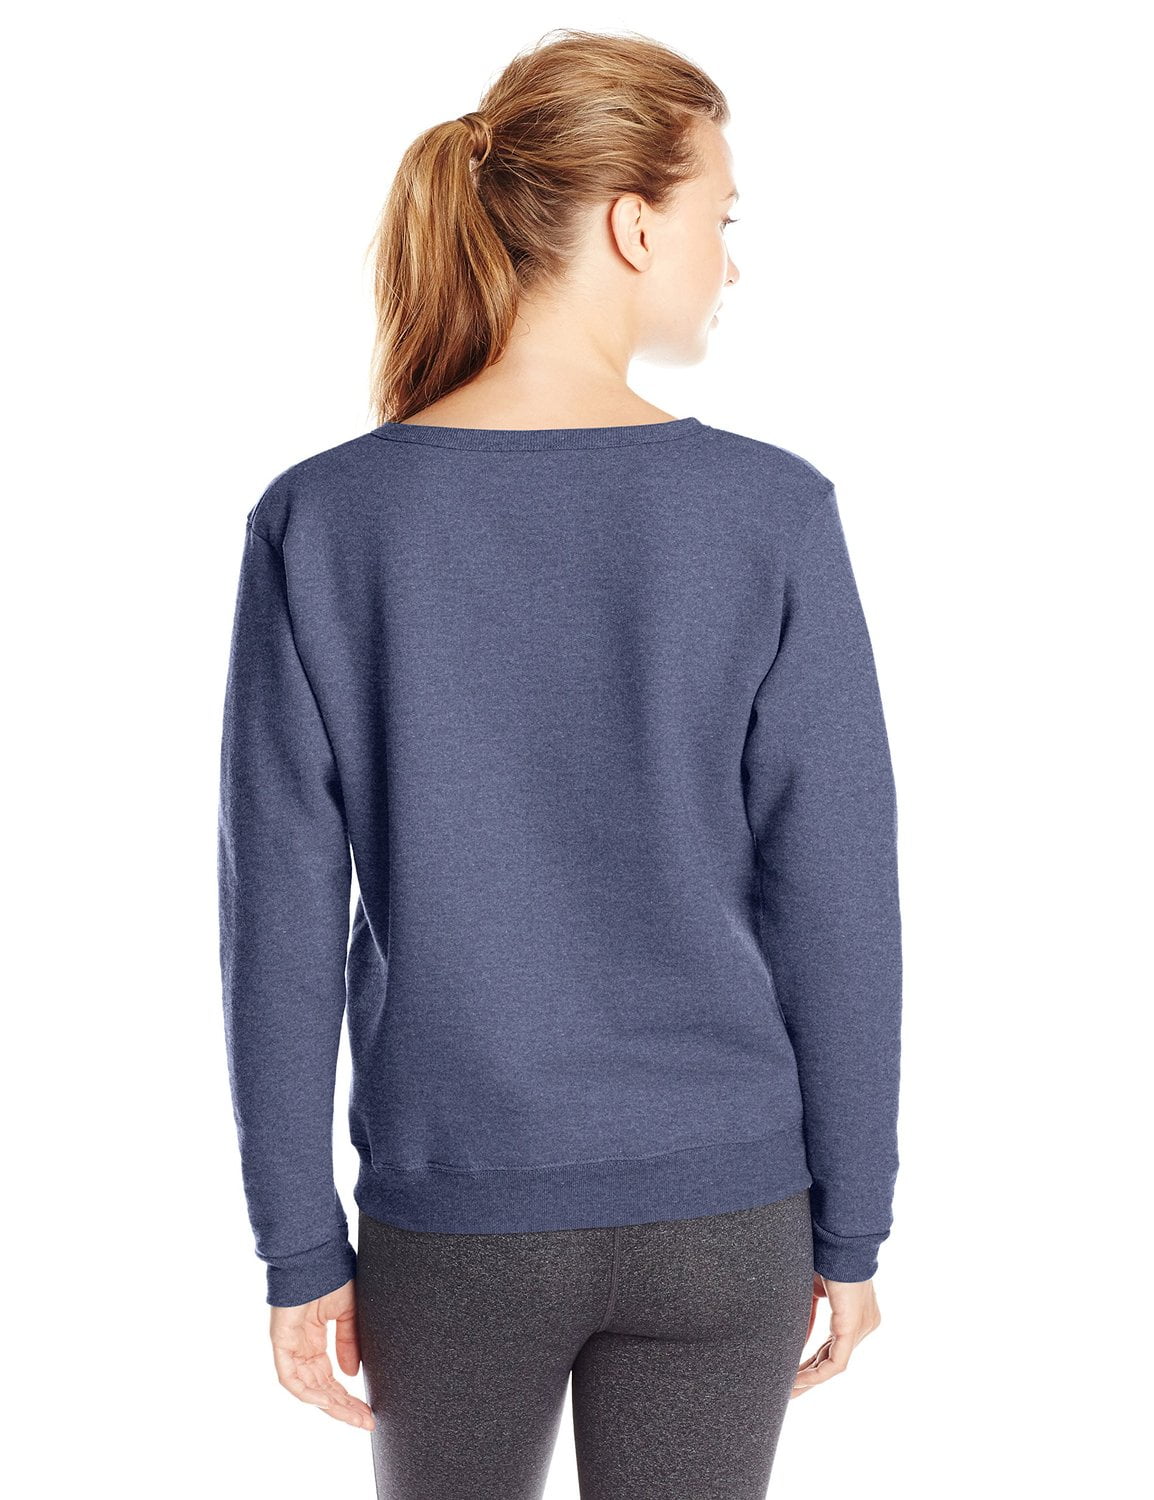 Women's Fleece V-Notch Sweatshirt - Walmart.com